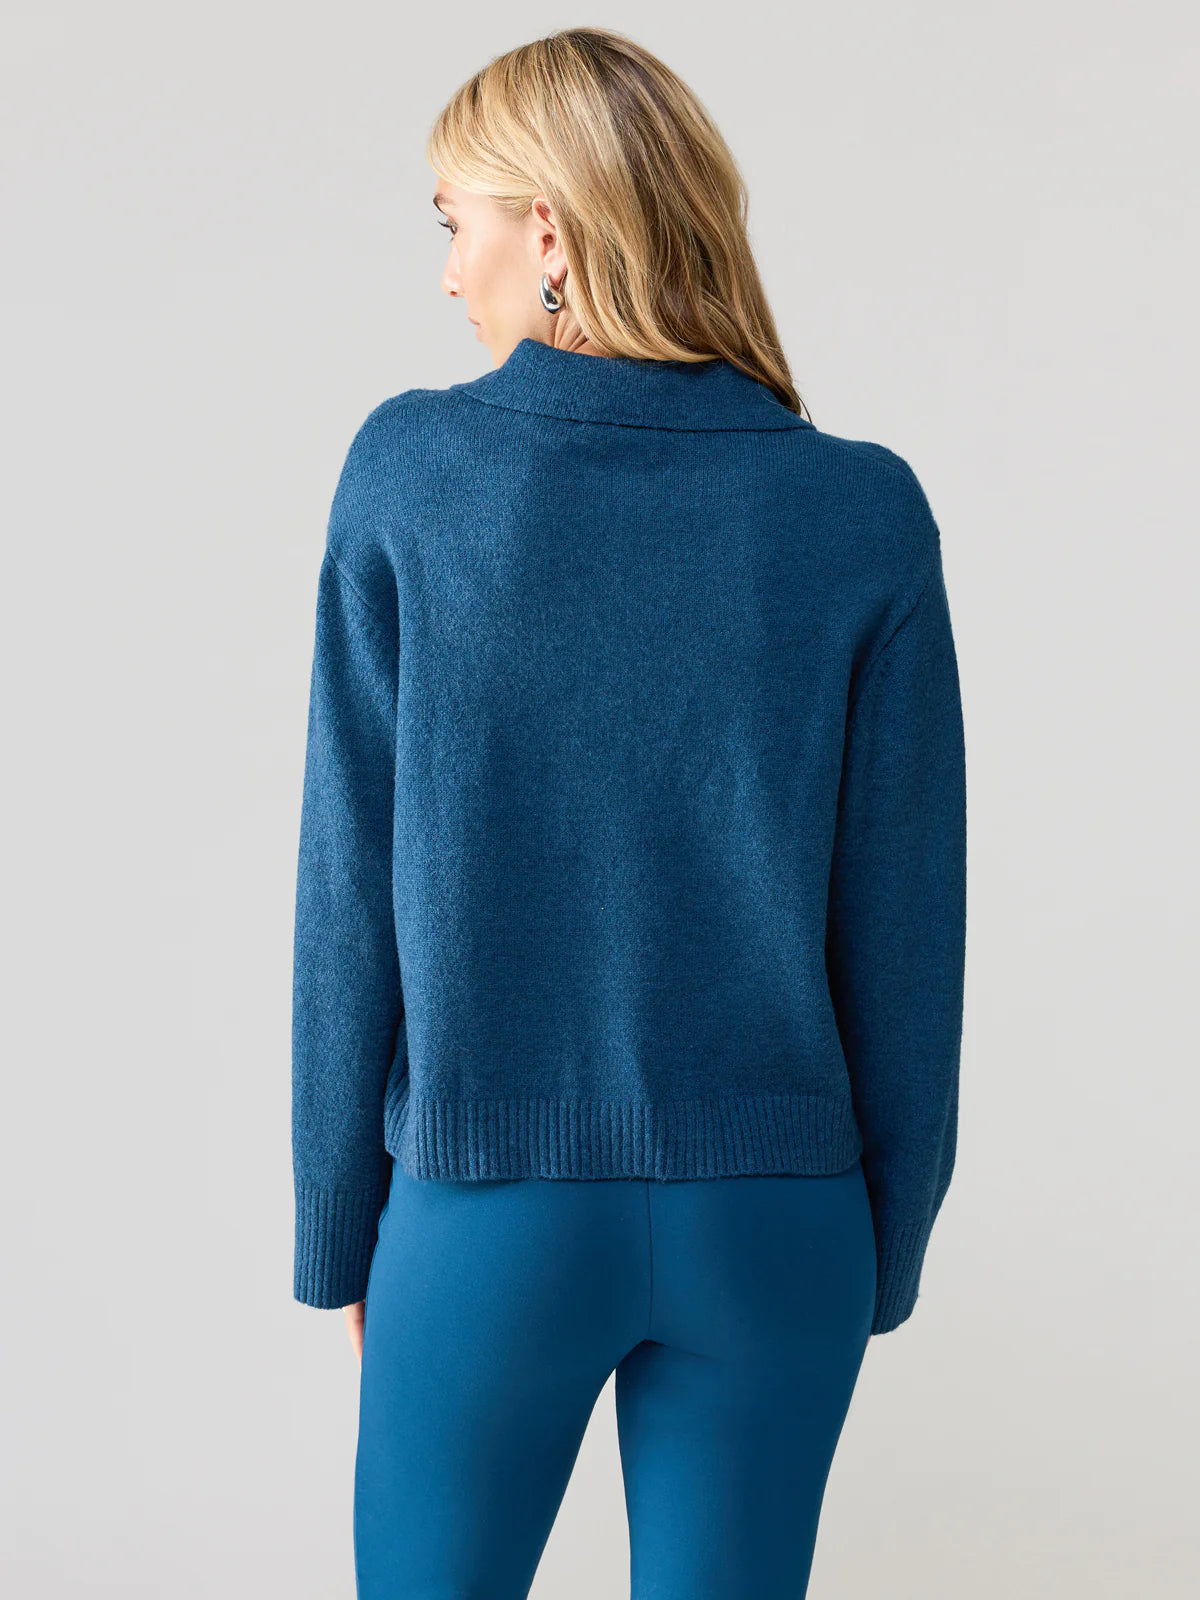 Sanctuary Johnny Collared sweater blue jewel